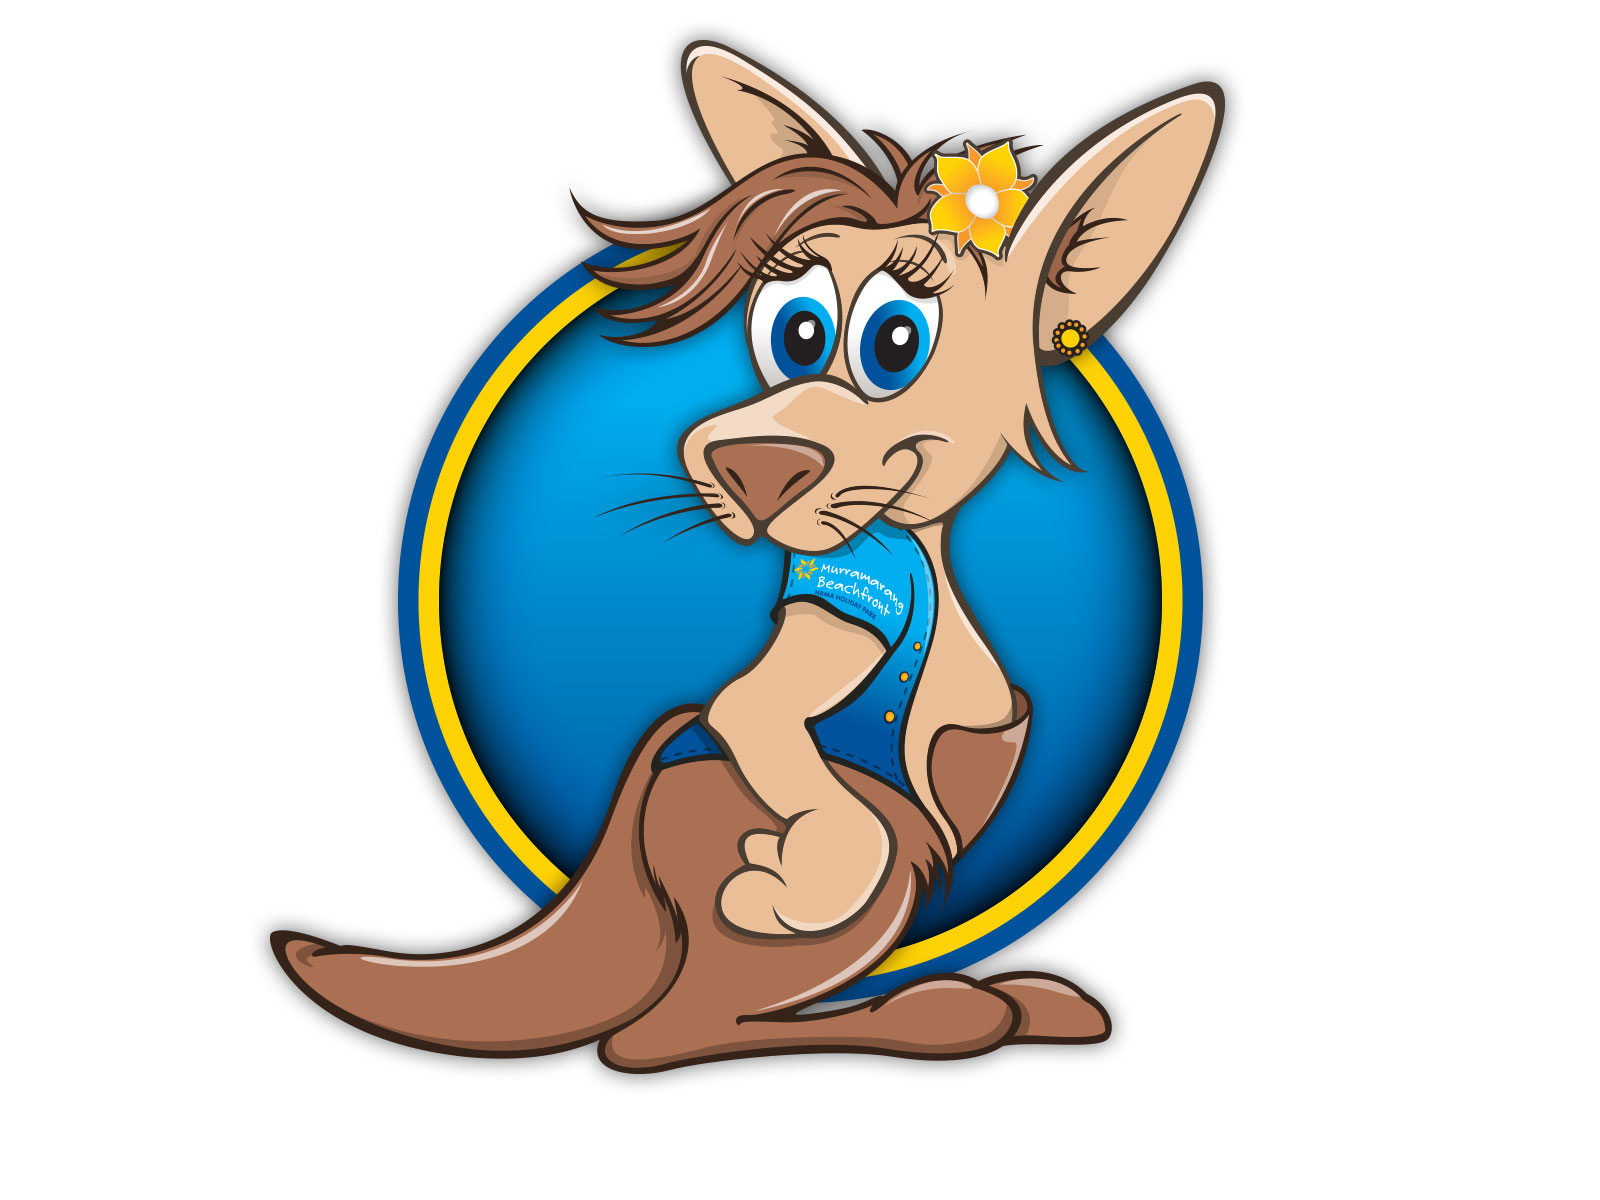 Colourful cartoon style kangaroo character illustration for mascot